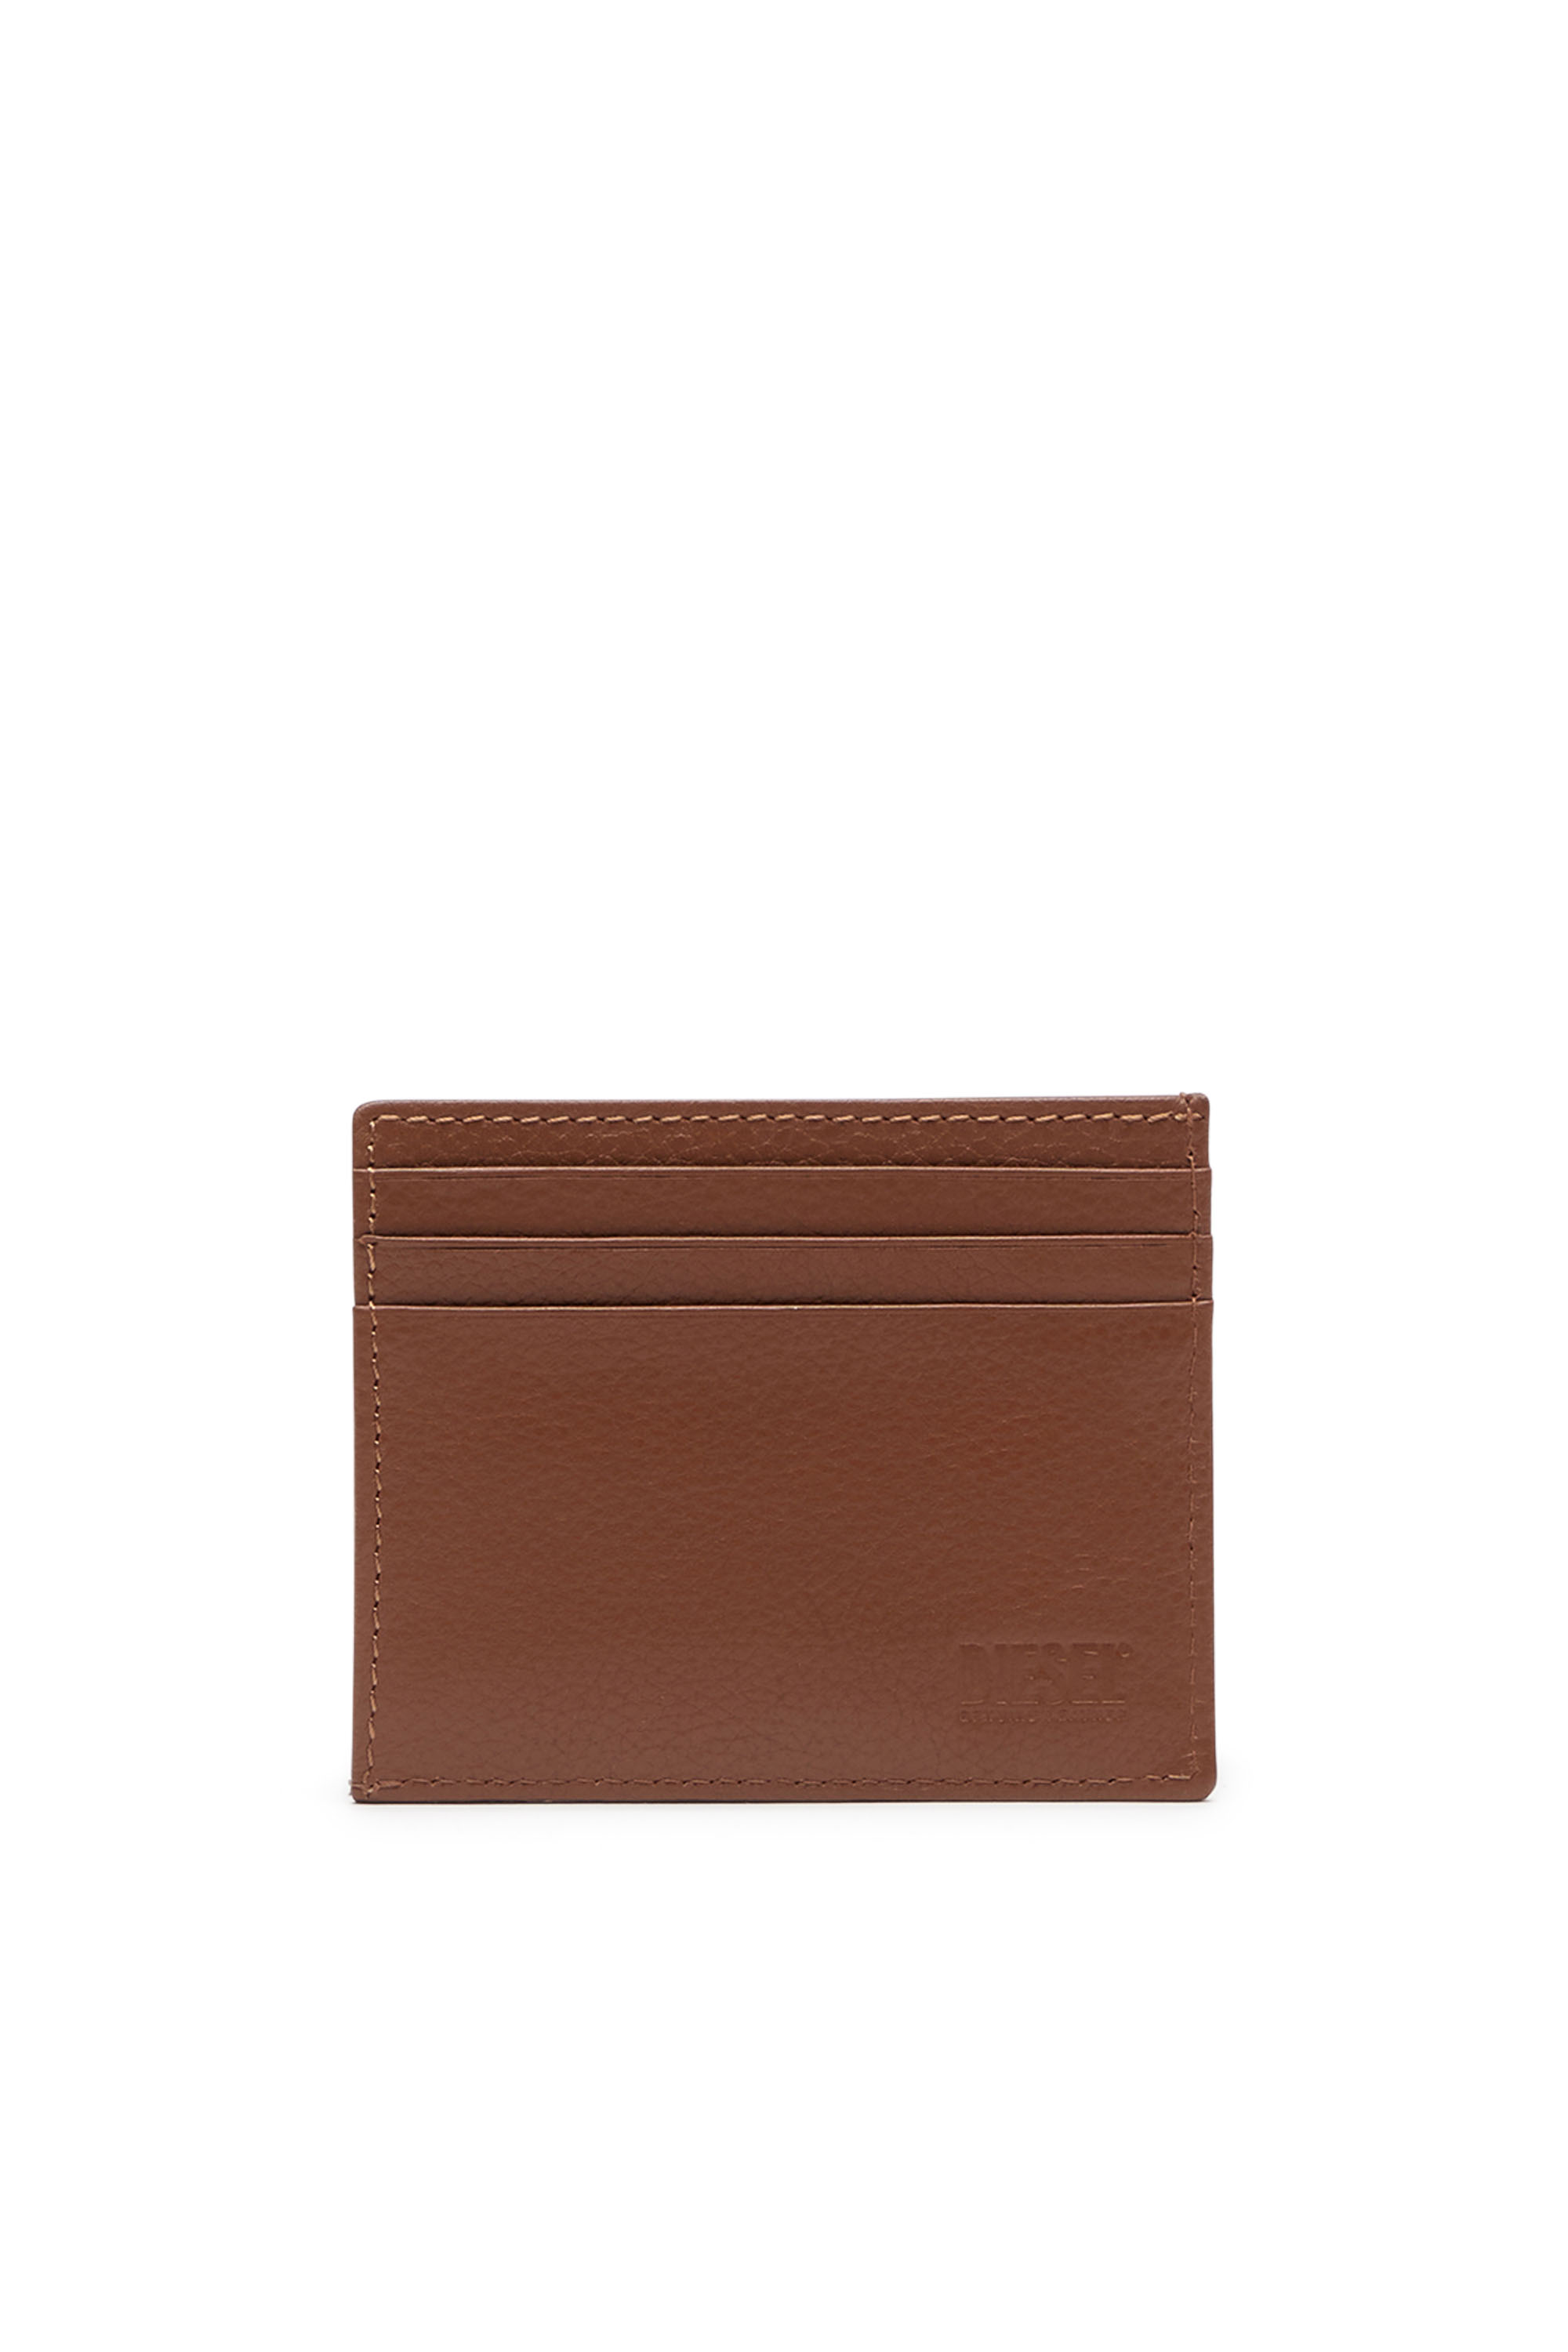 Diesel - MEDAL-D CARD HOLDER 6, Man Card holder in grainy leather in Brown - Image 2